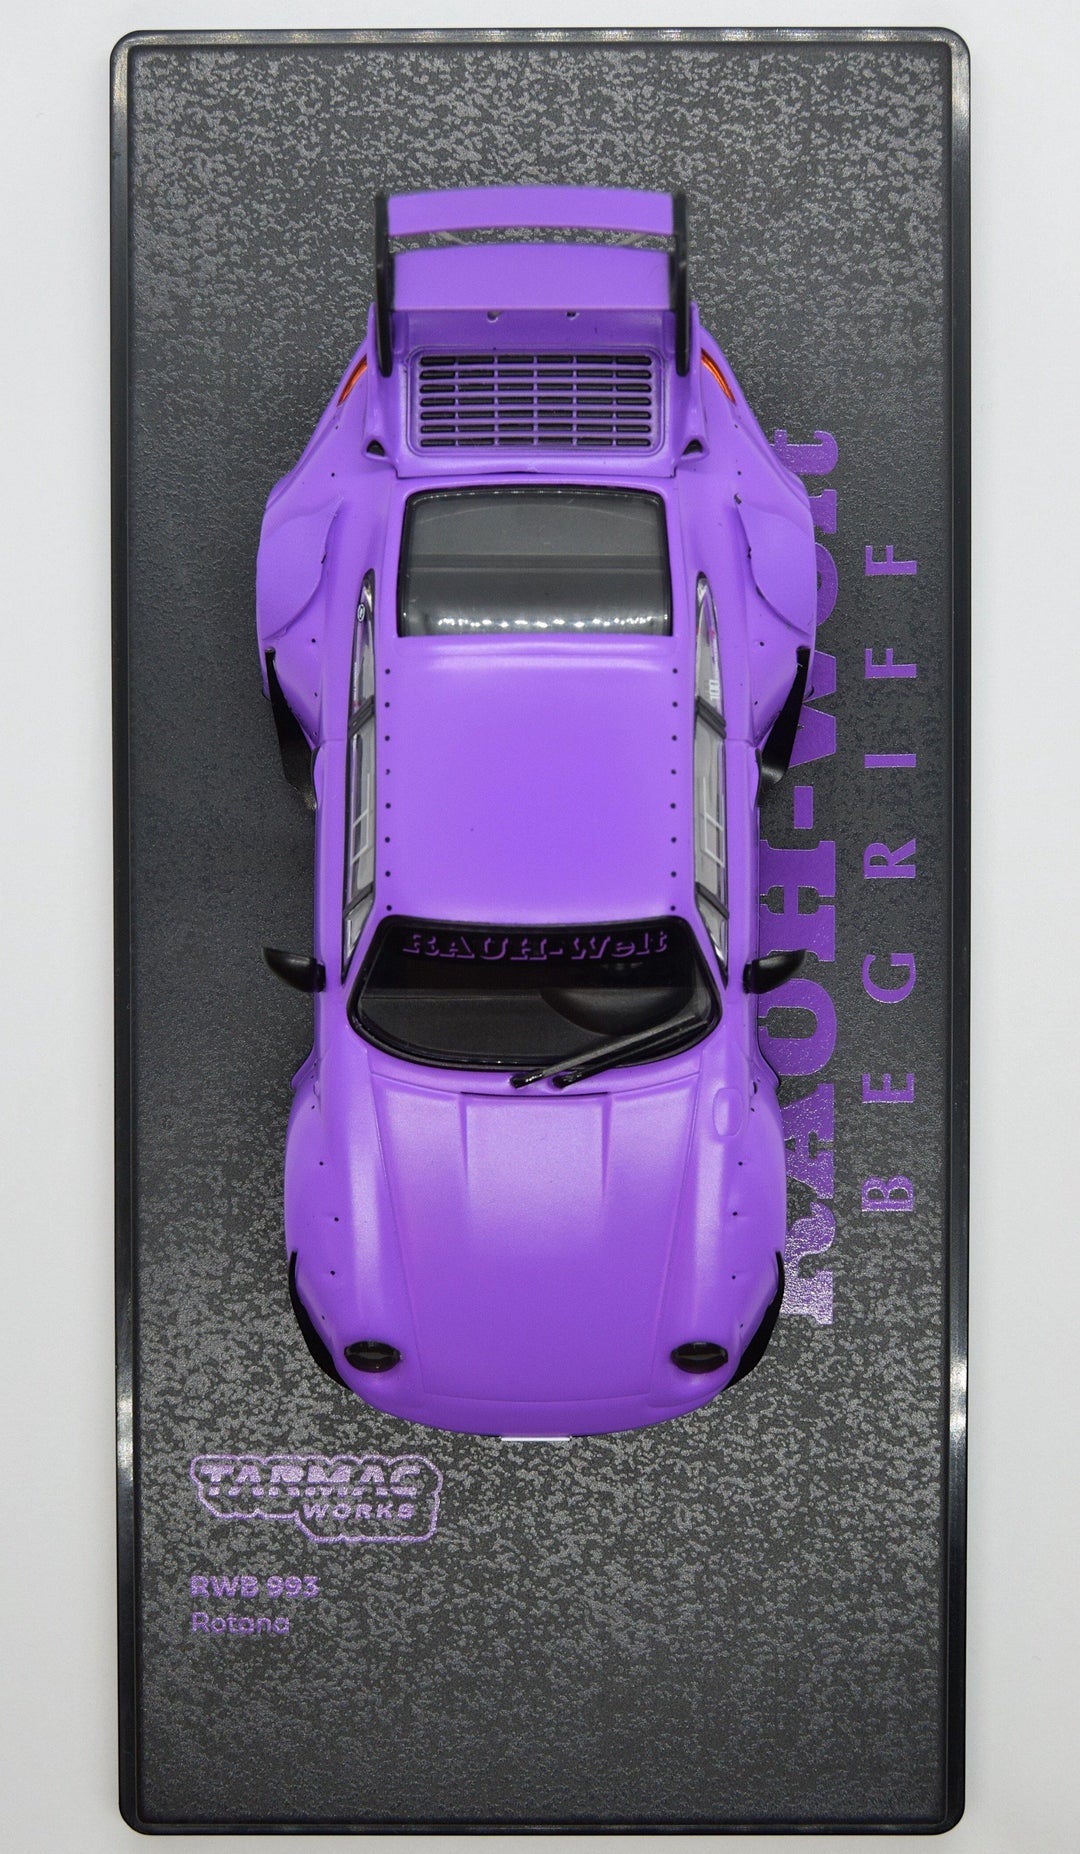 Tarmac Works 1:43 RWB 993 Rotana Limited Edition (Purple) Top View